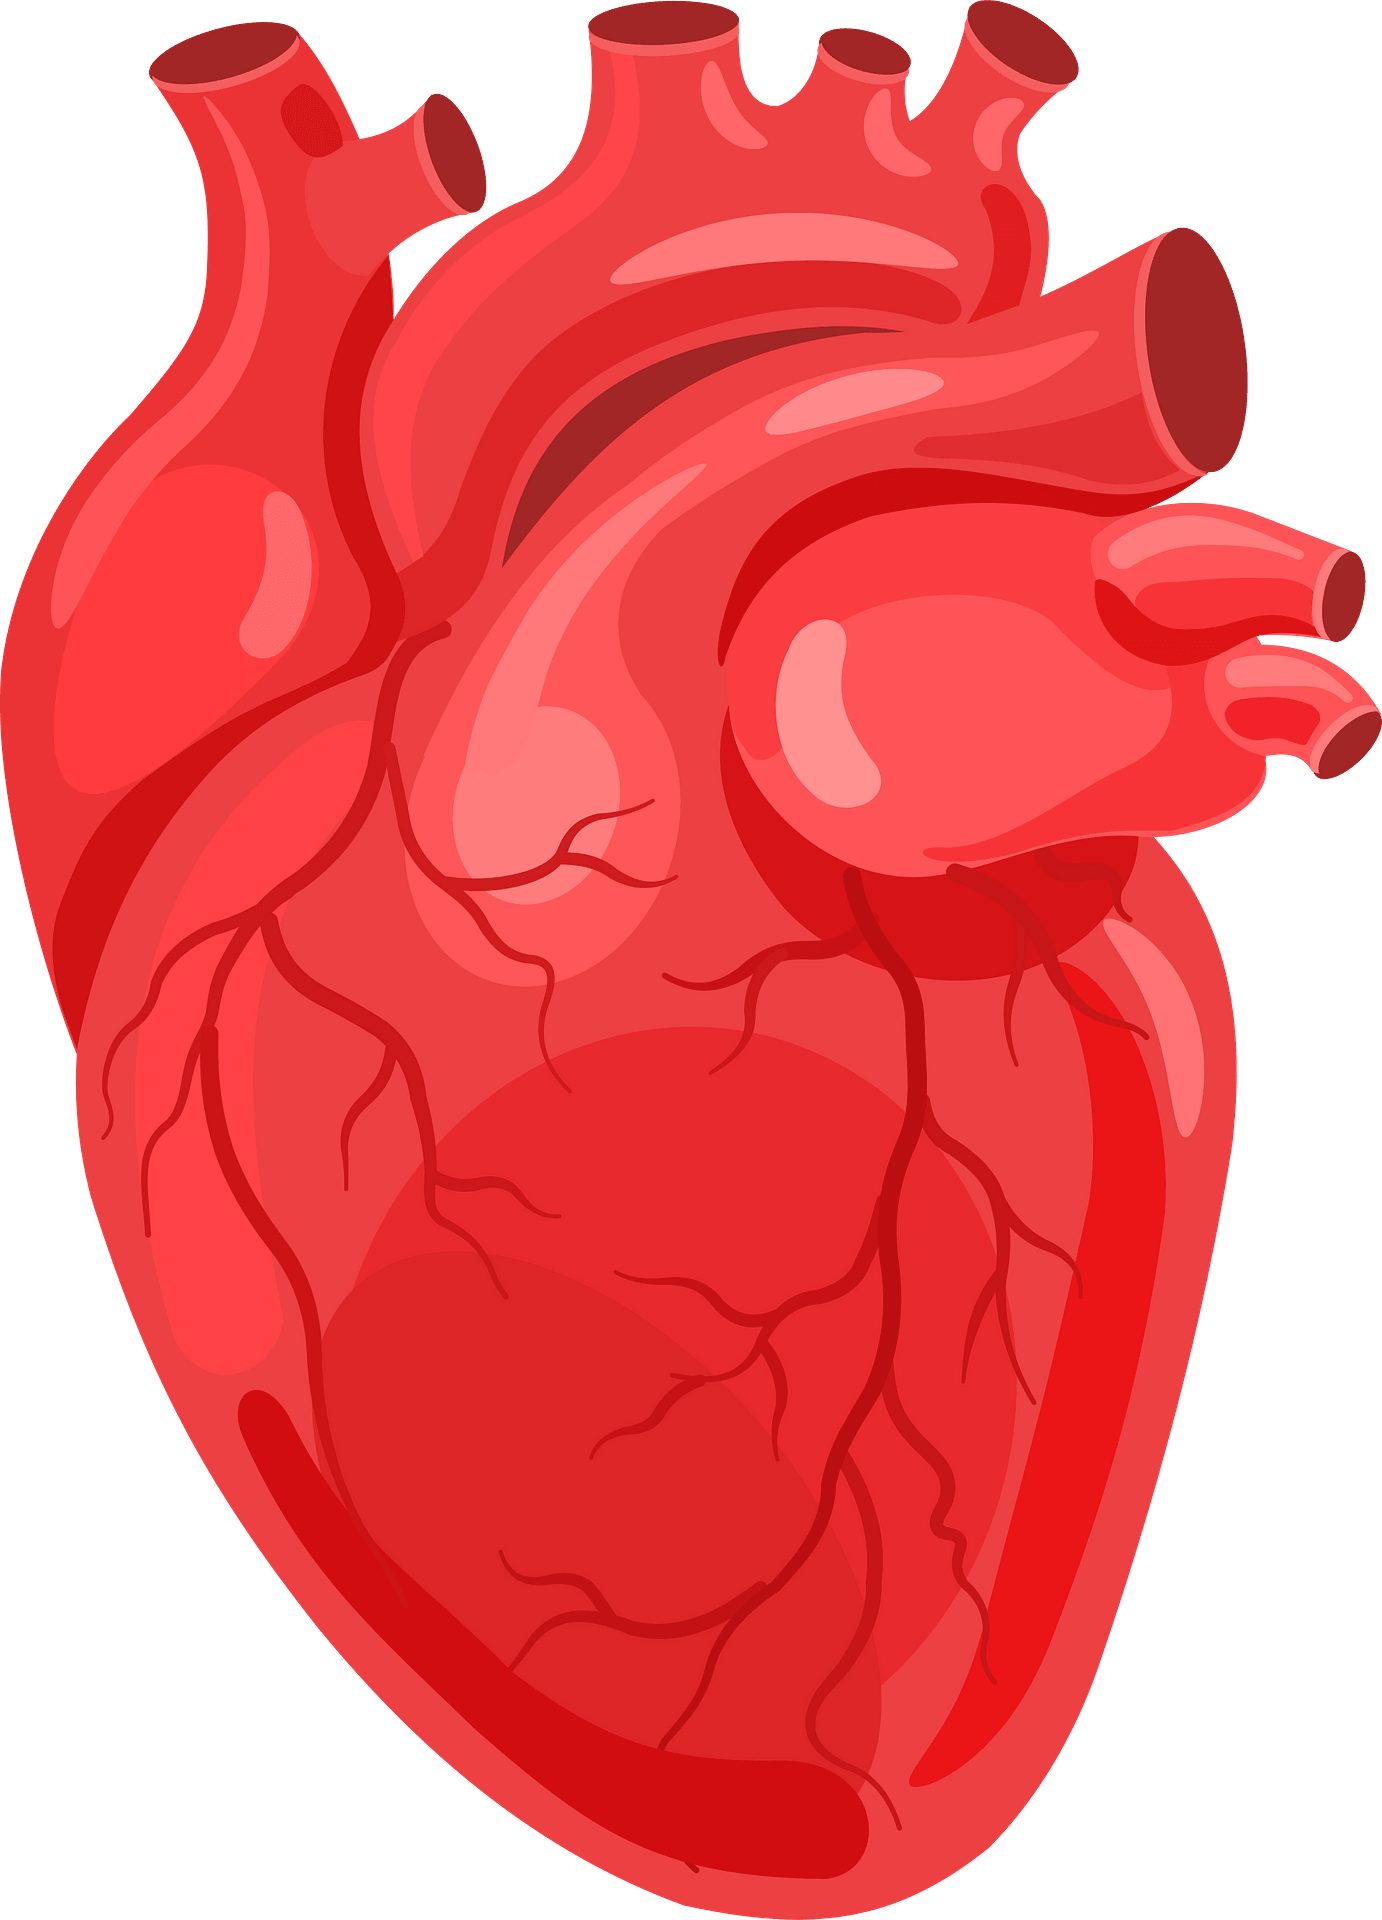 Human Heart PNG Clipart